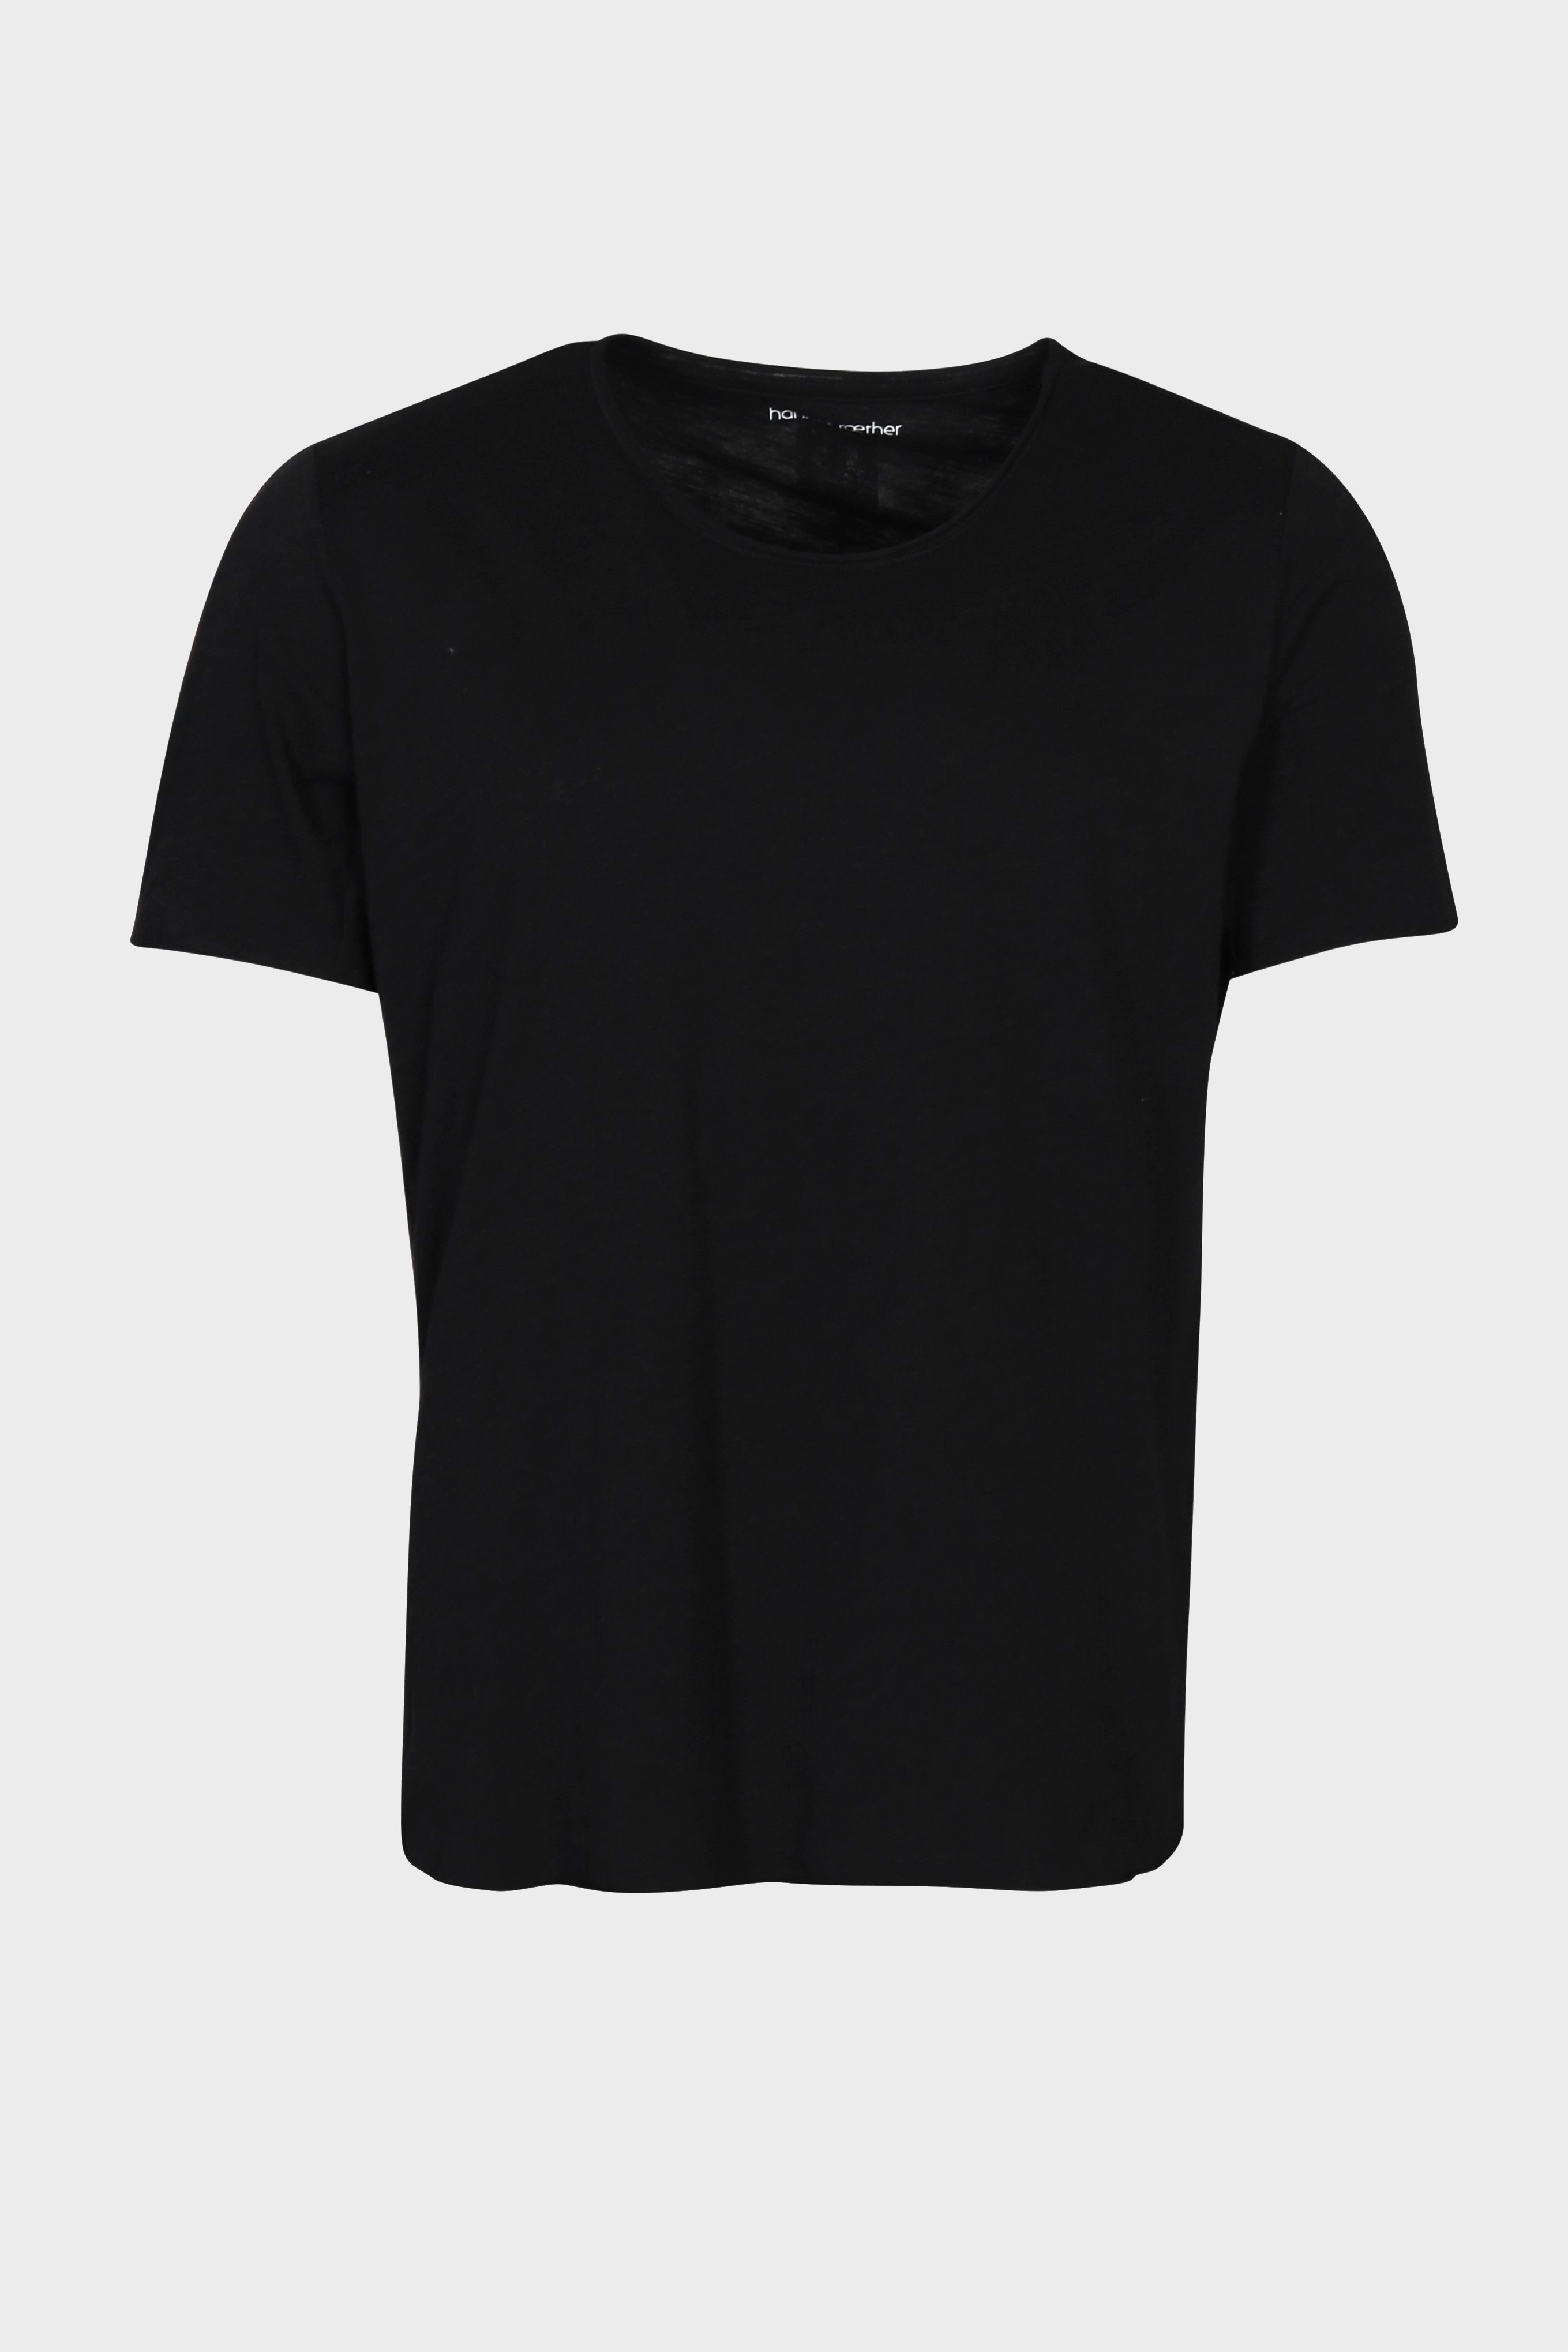 HANNES ROETHER Slub Jersey T-Shirt in Black